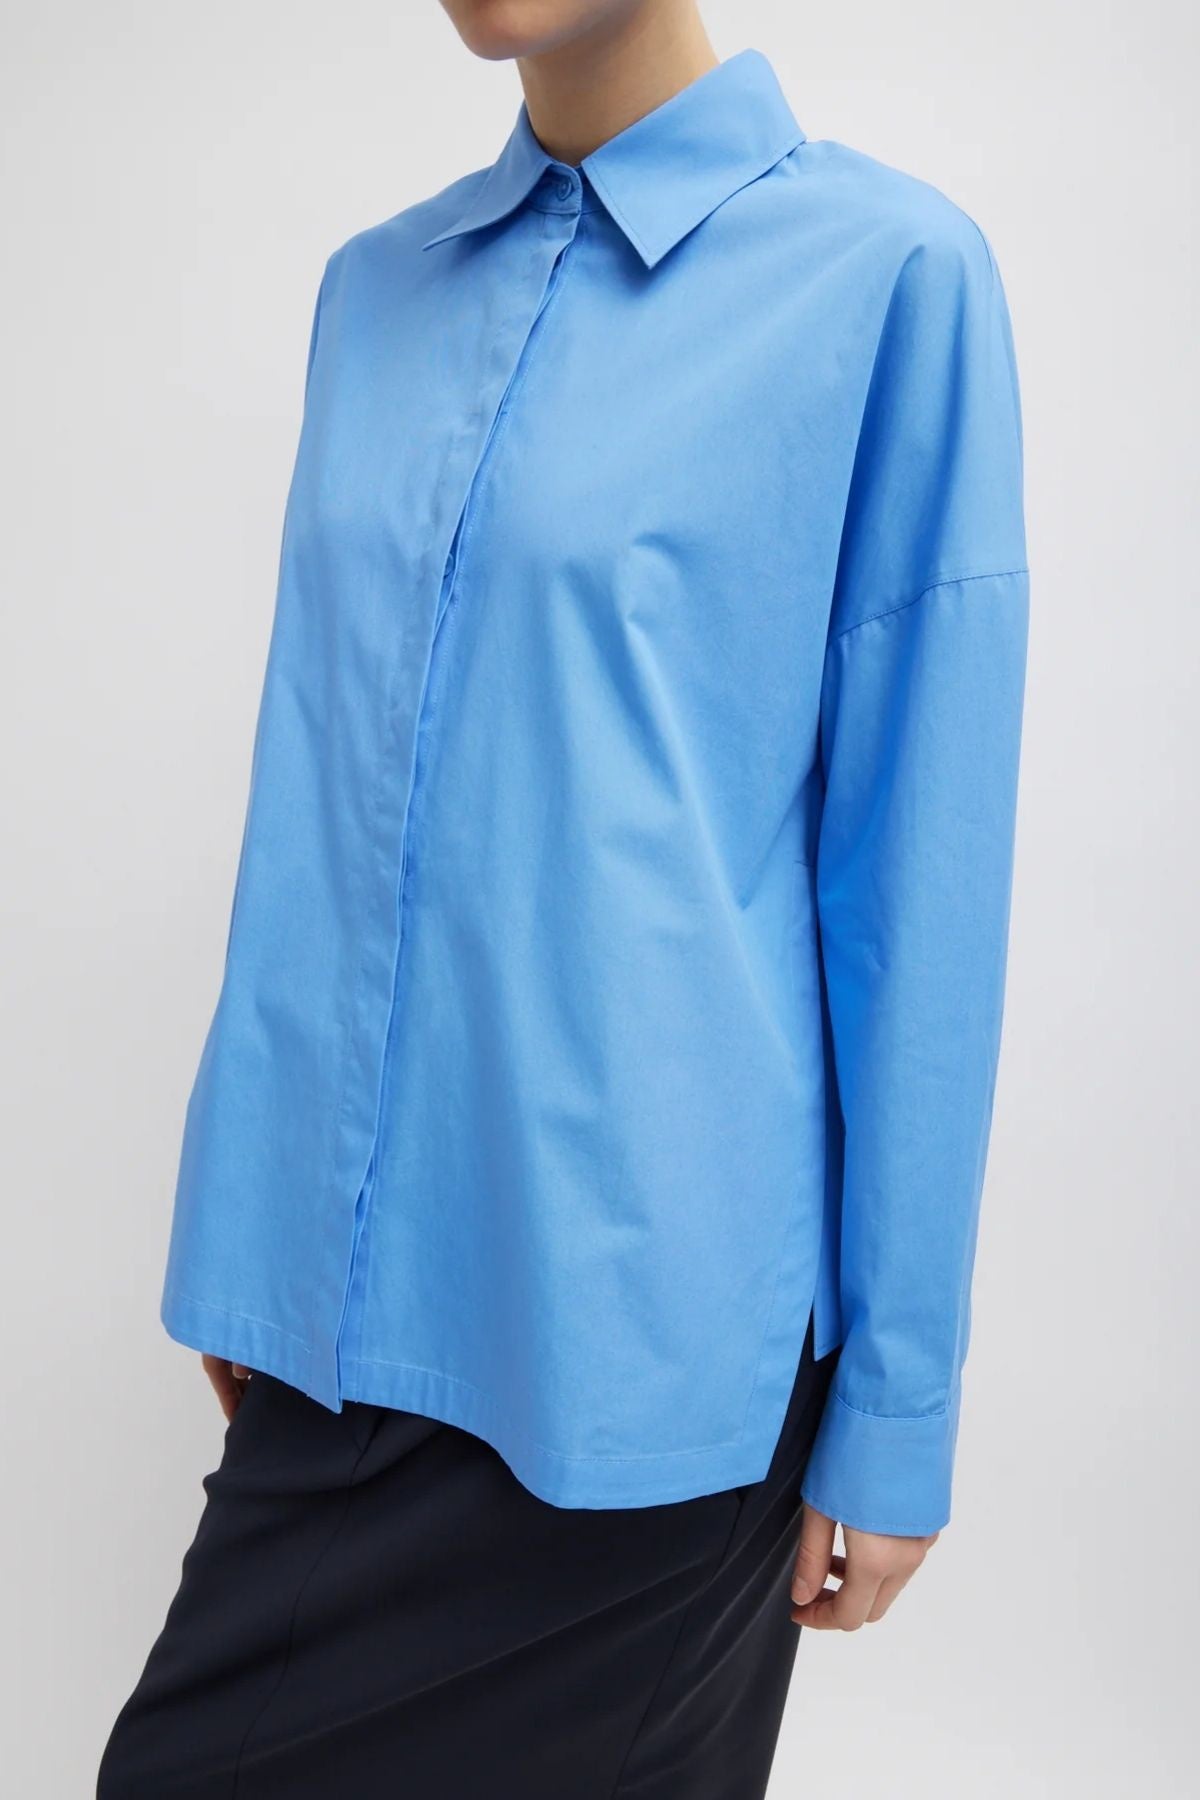 Tibi Gabe Oversized Shirt - Newman Blue